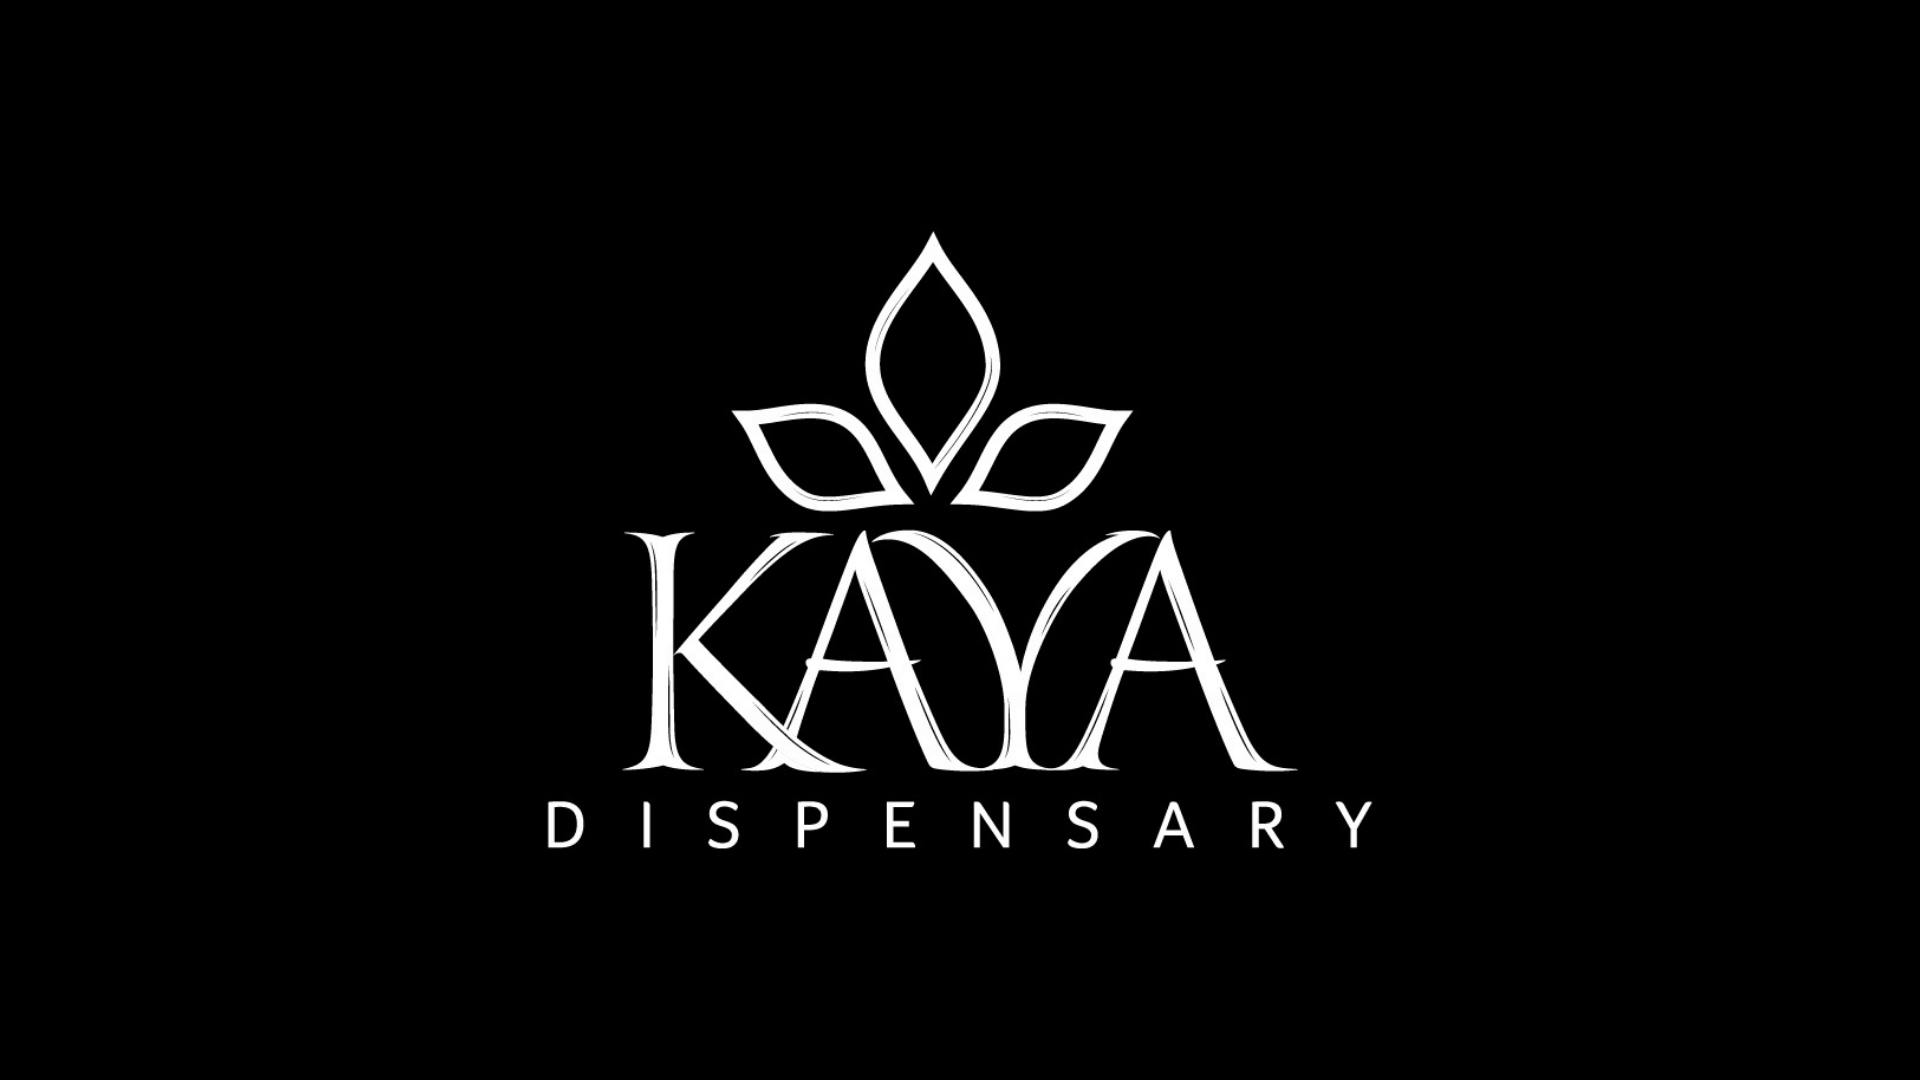 Kaya Dispensary